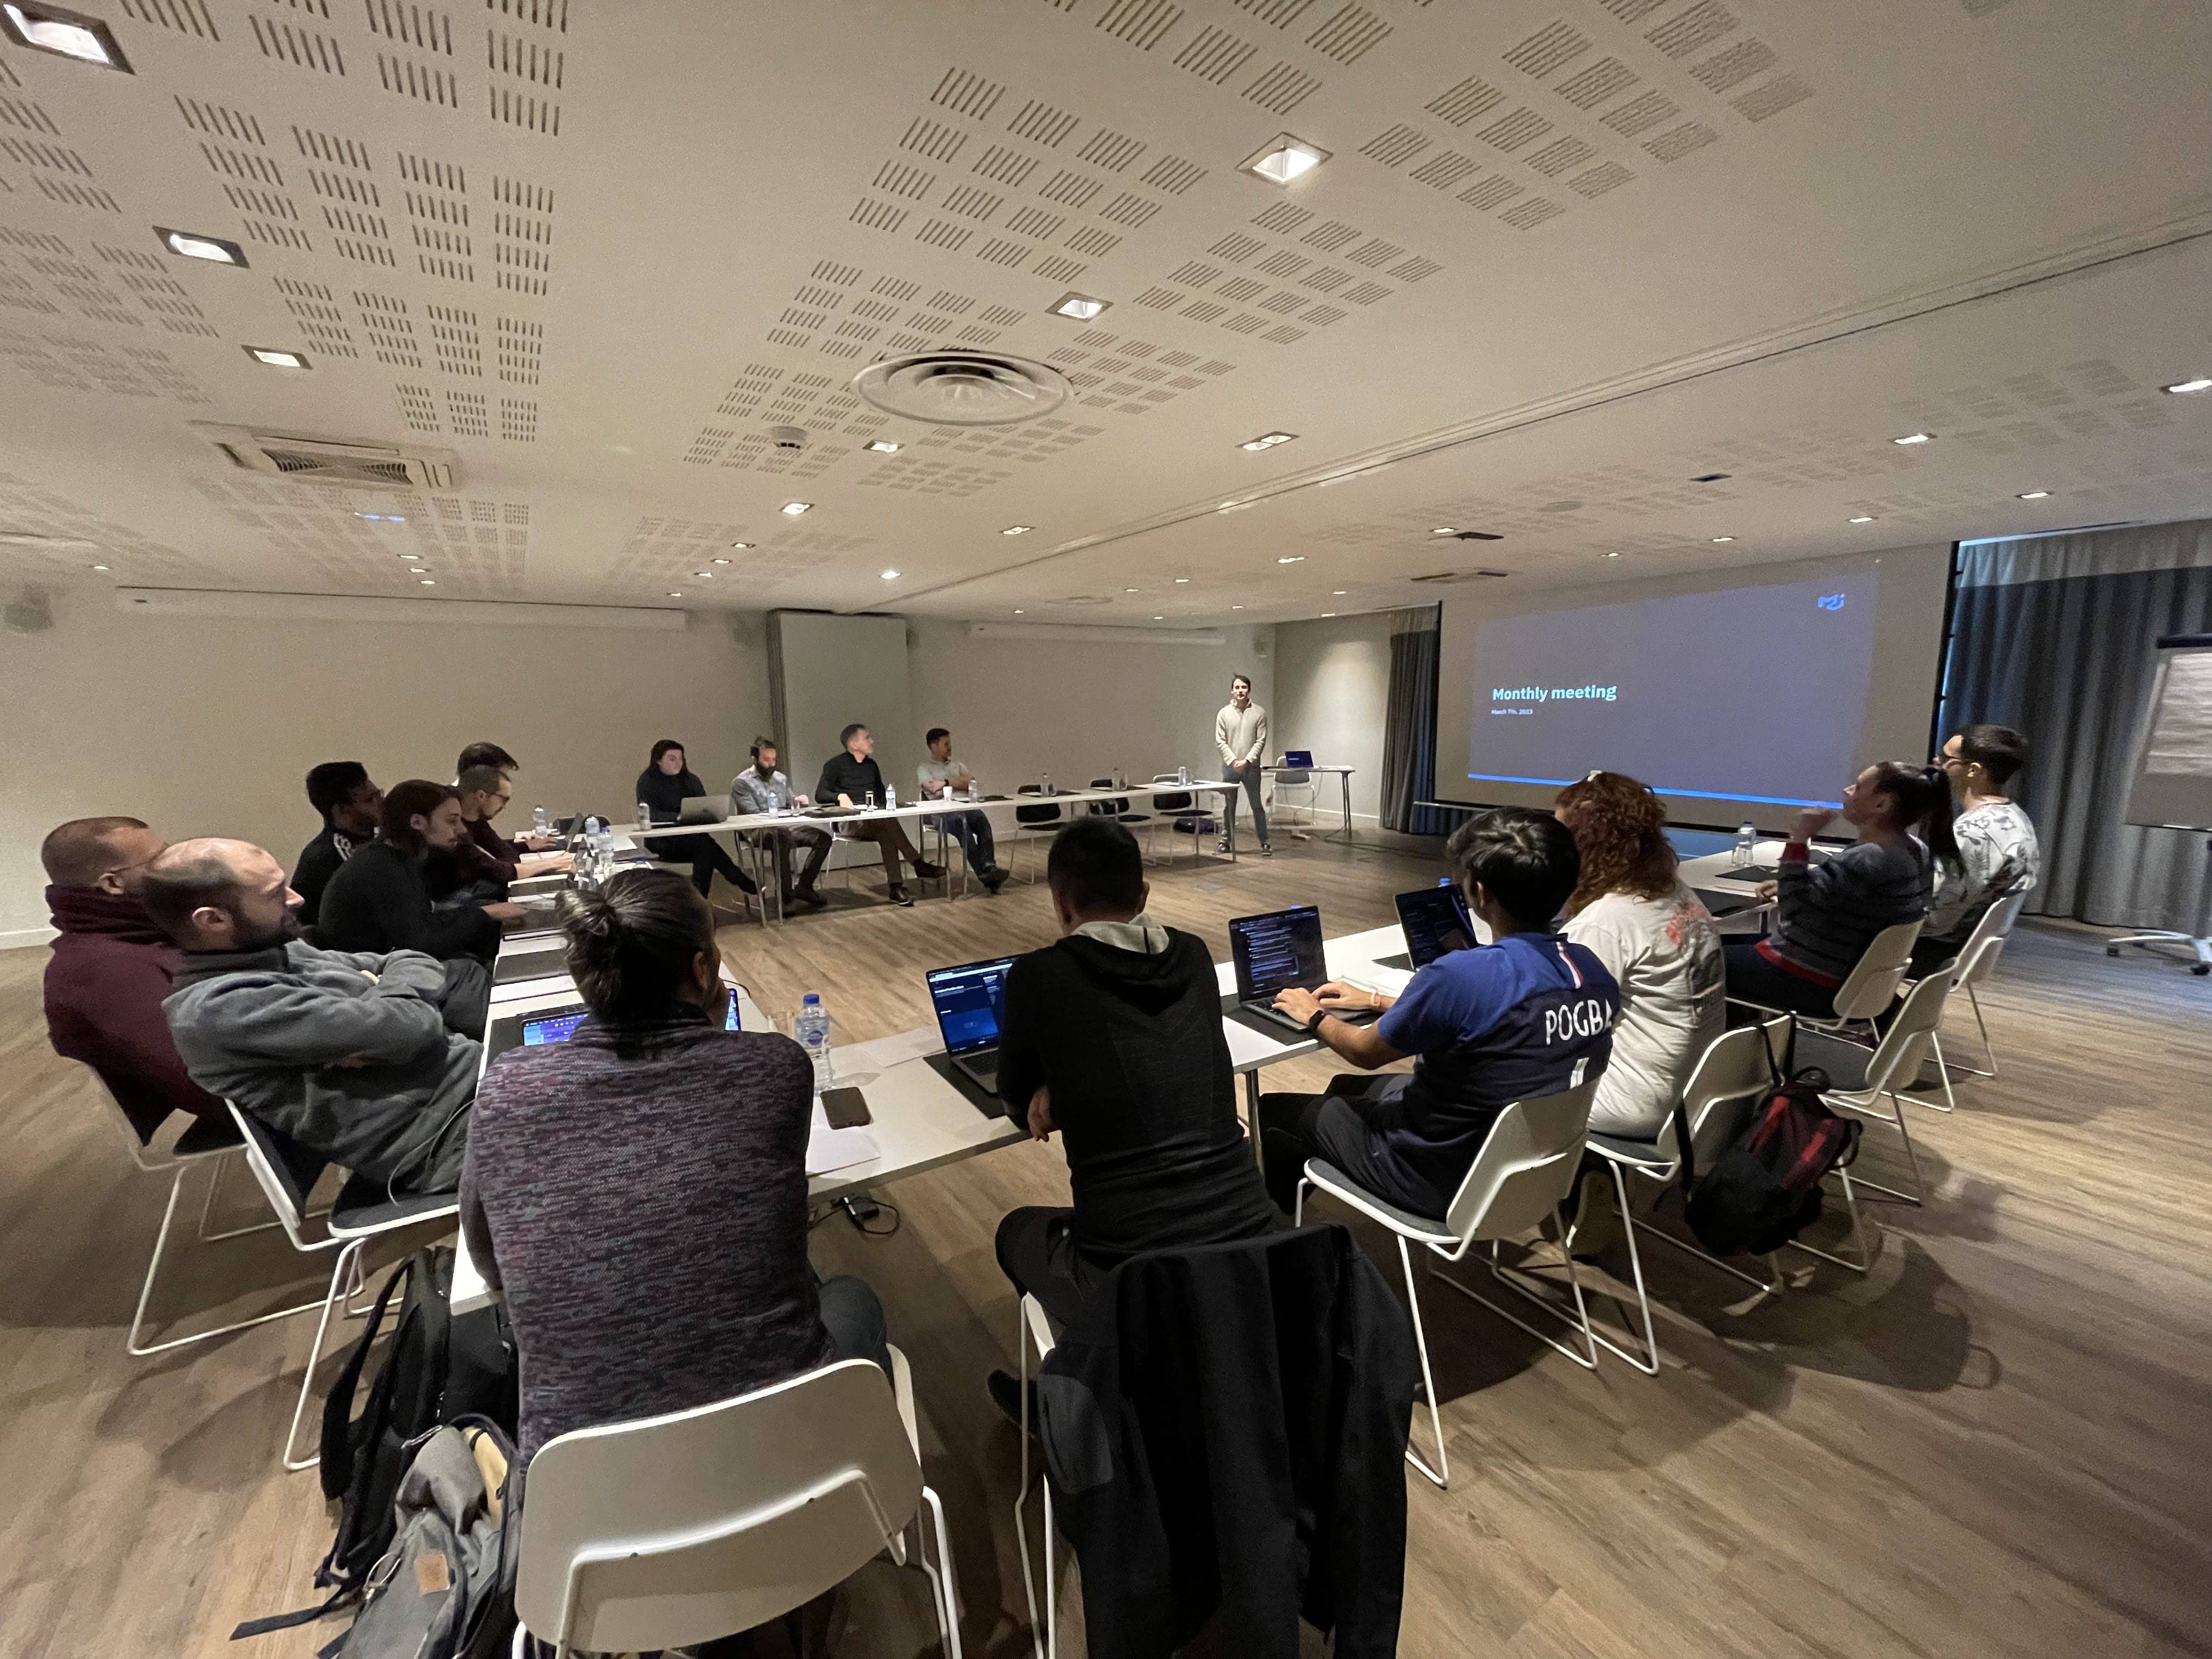 MUI team members sit in a half-U shape as Co-Founder Olivier Tassinari presents the monthly meeting slides.